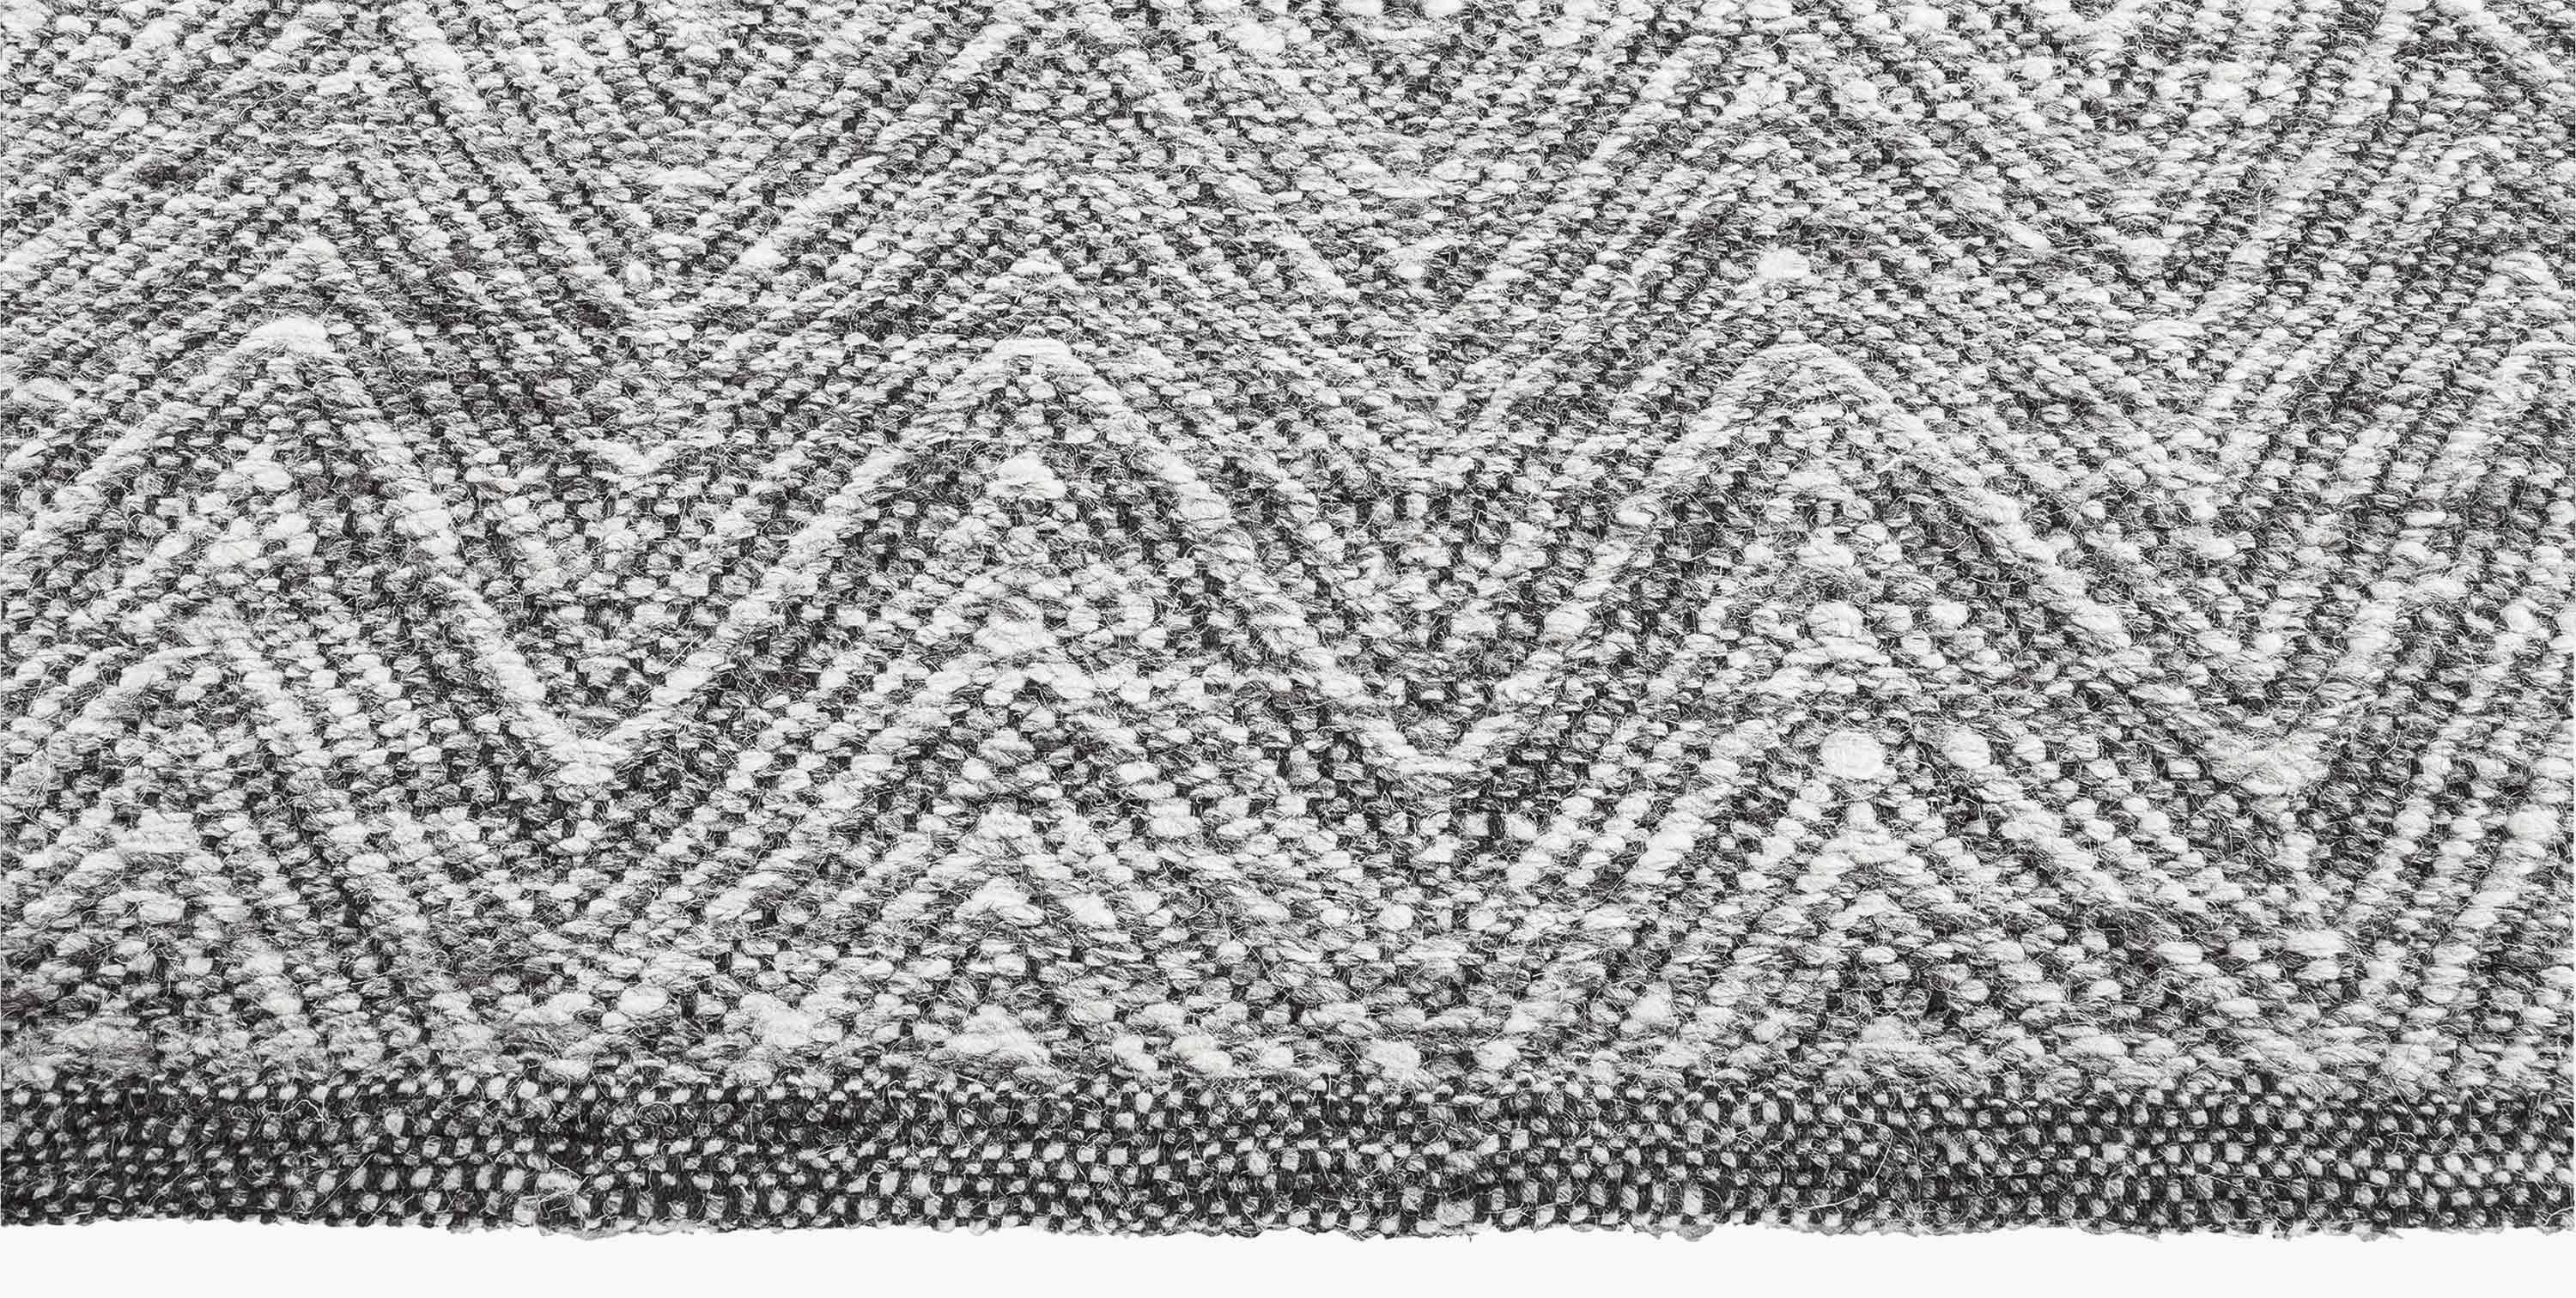 For Sale: Black (Charcoal) Ben Soleimani Ceyah Rug– Hand-woven Plush Textured Wool + Linen Charcoal 9'x12' 3